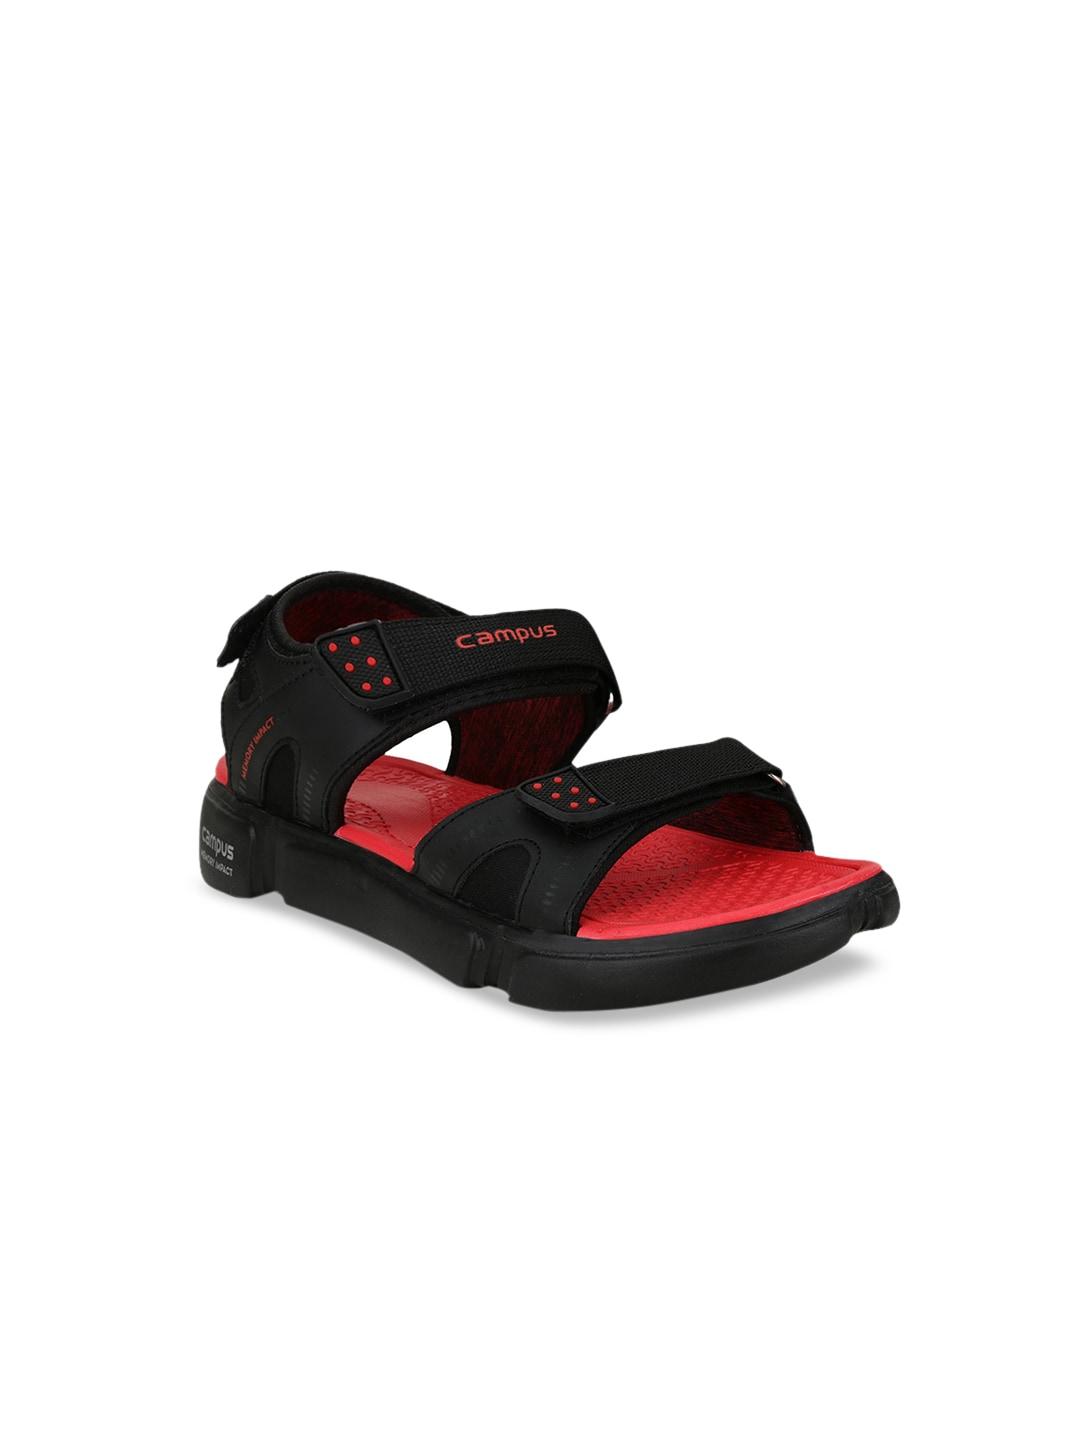 campus-men-black-&-red-sports-sandals